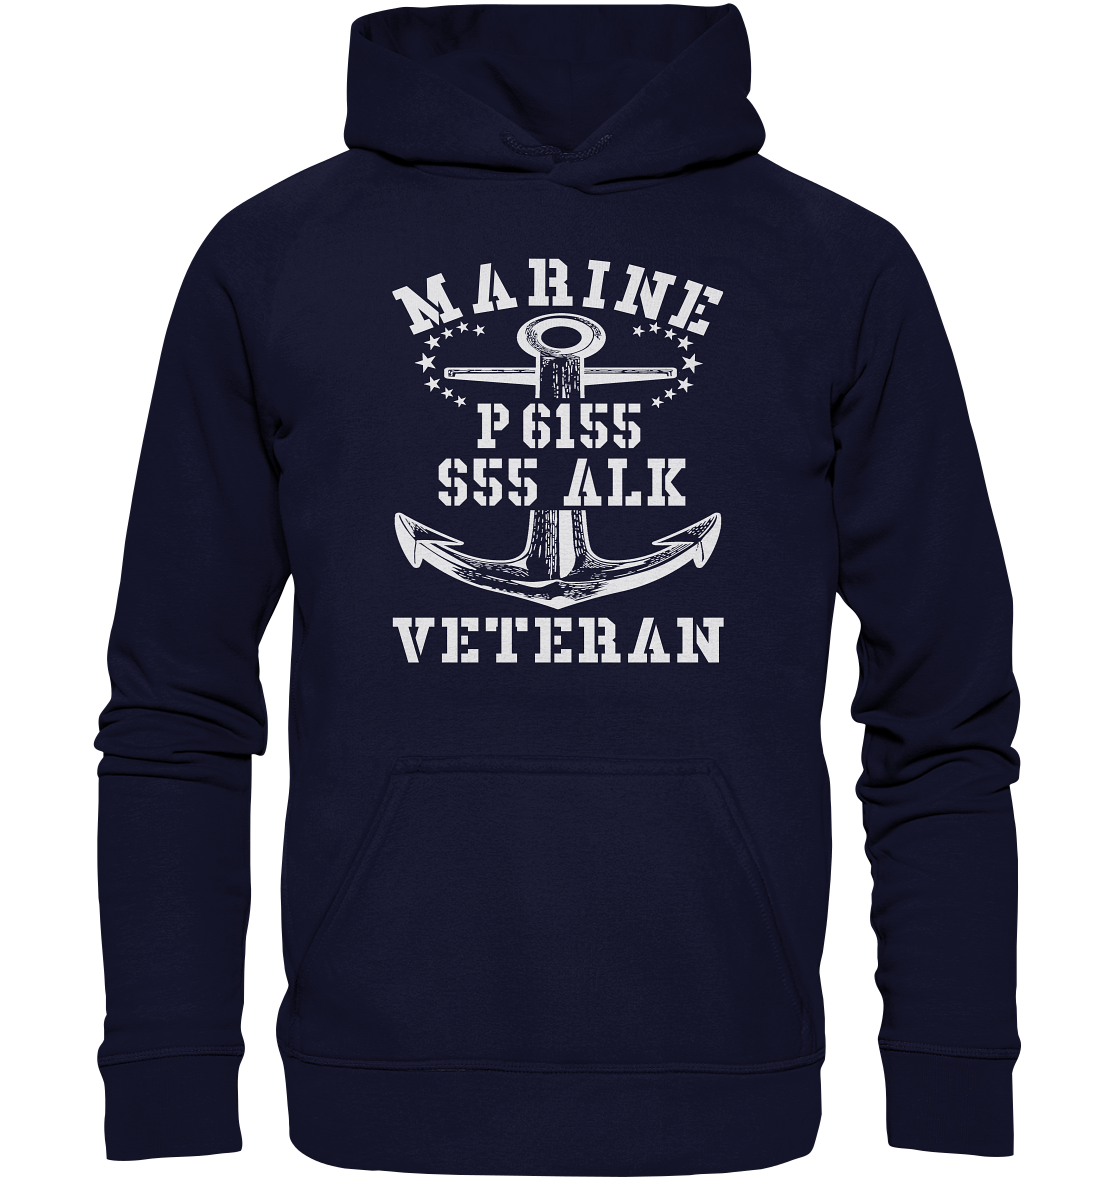 P6155 S55 ALK Marine Veteran - Basic Unisex Hoodie